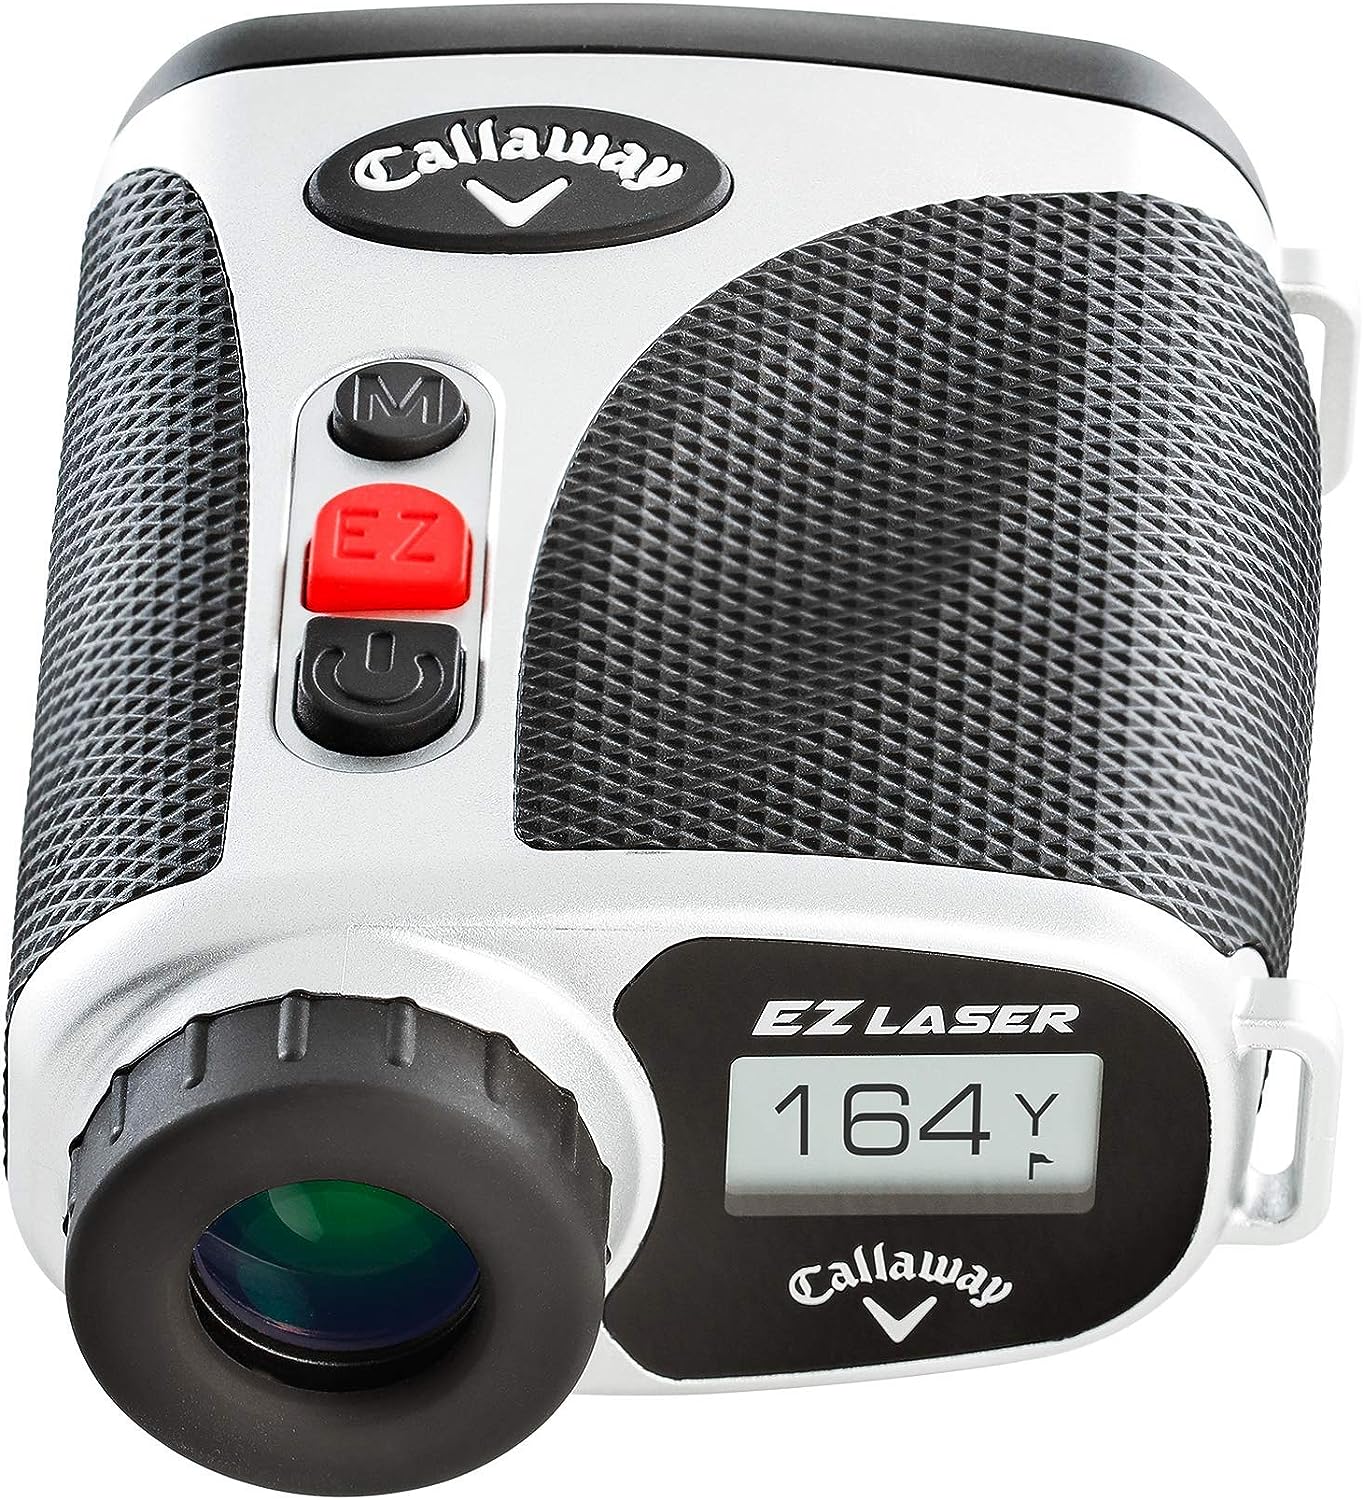 Callaway Laser Rangefinder Review